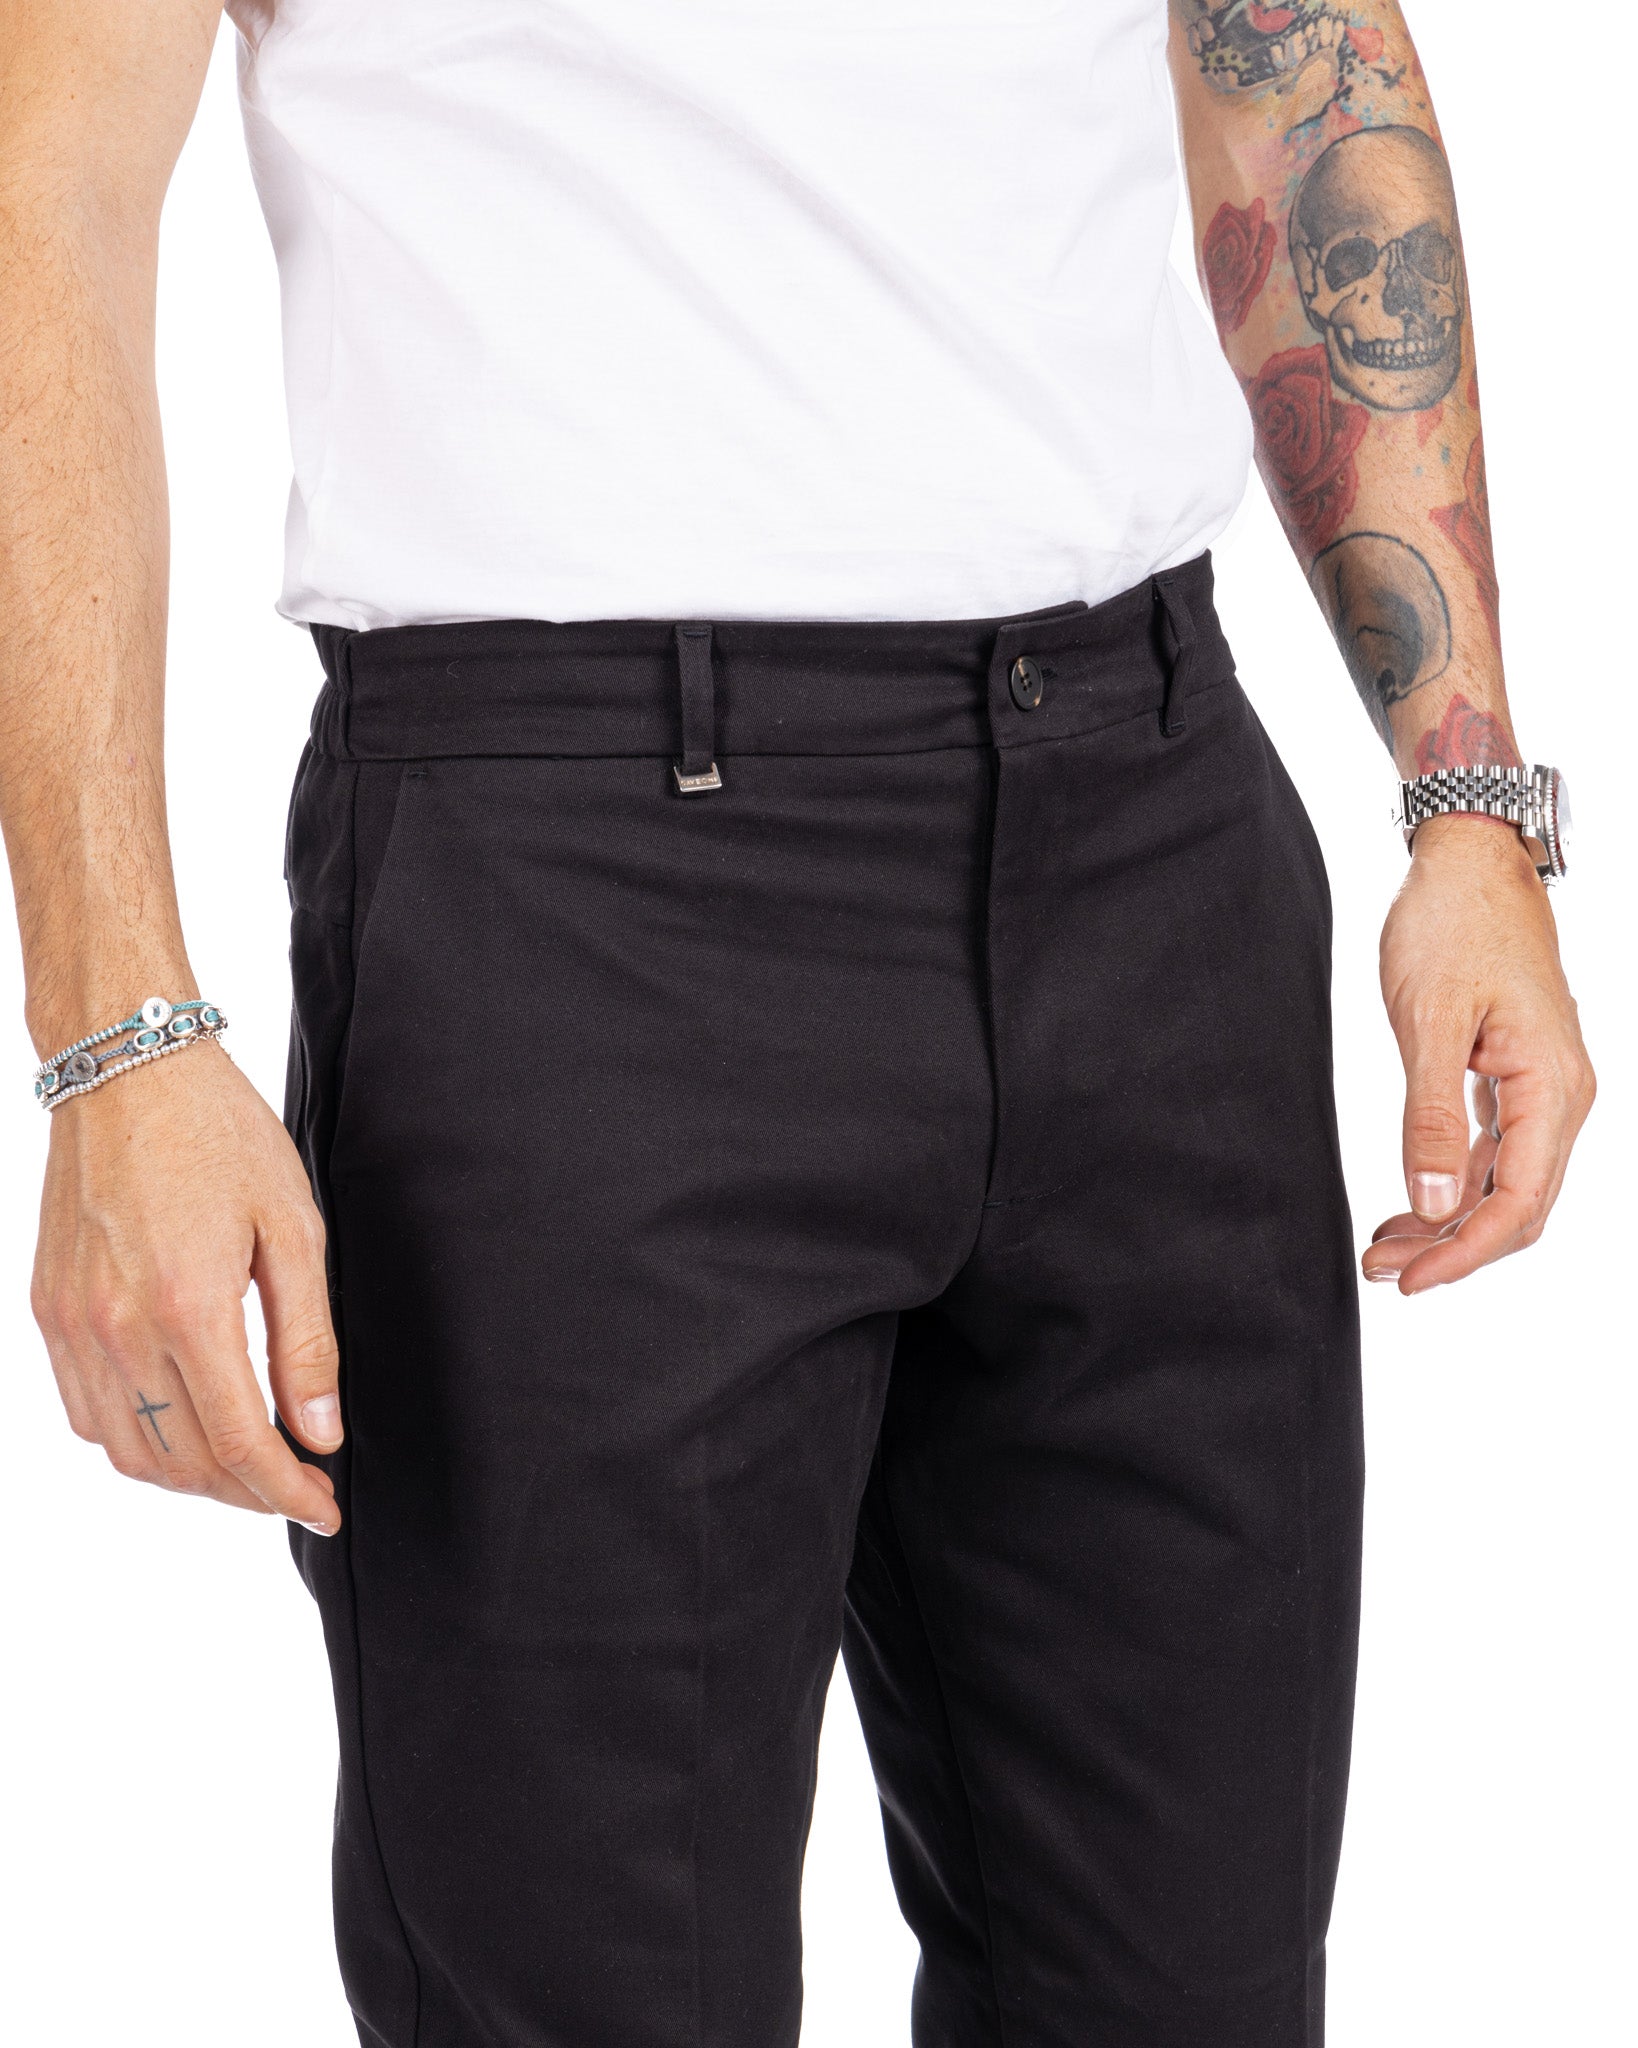 Elder - black cotton capri trousers